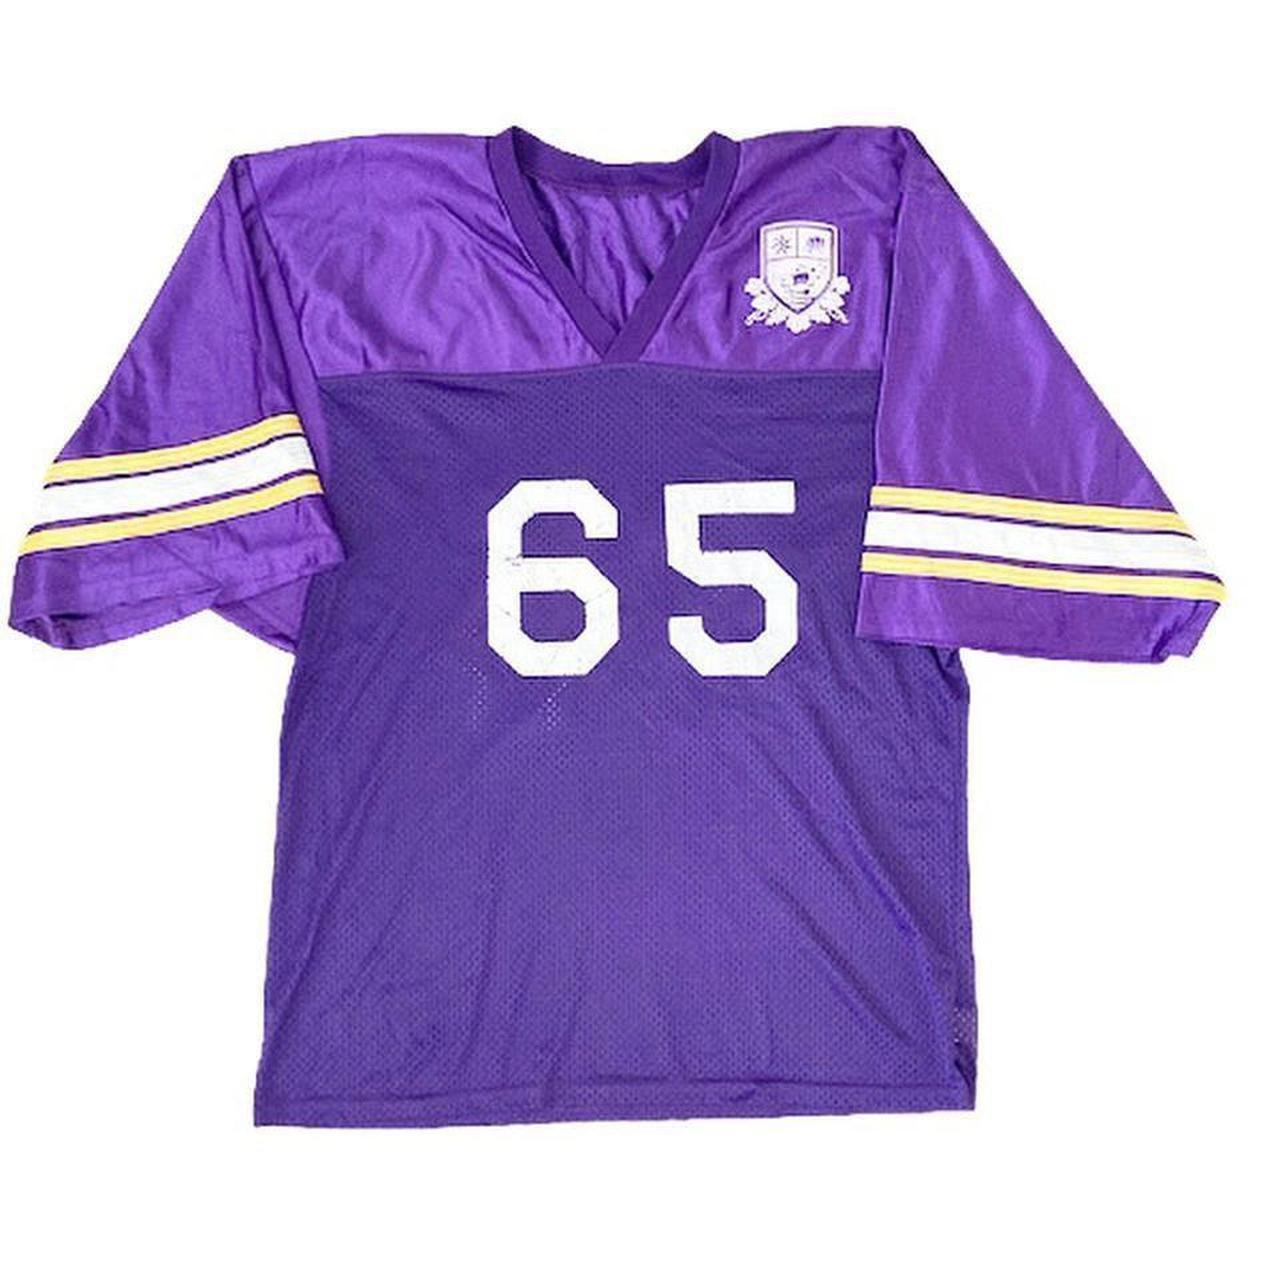 Vintage American football jersey in purple and - Depop